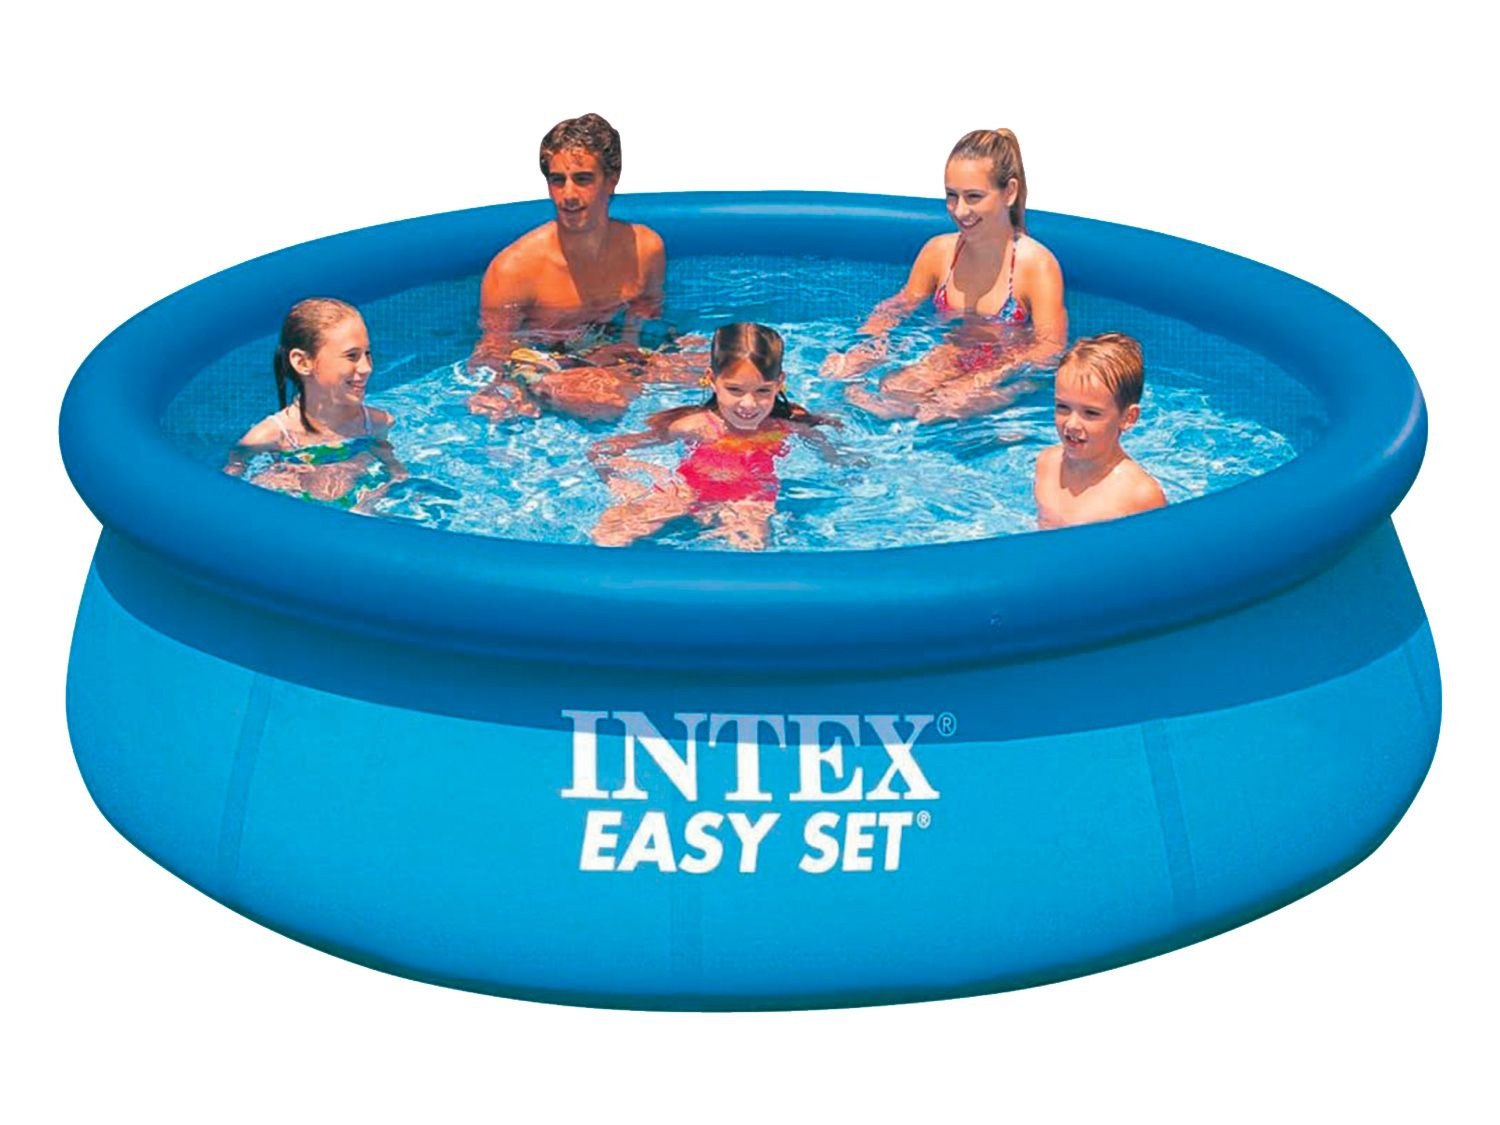 Filterpumpe 2271 L/Std und Leiter 289353 Intex 305x91 cm Easy Set mit Pool incl